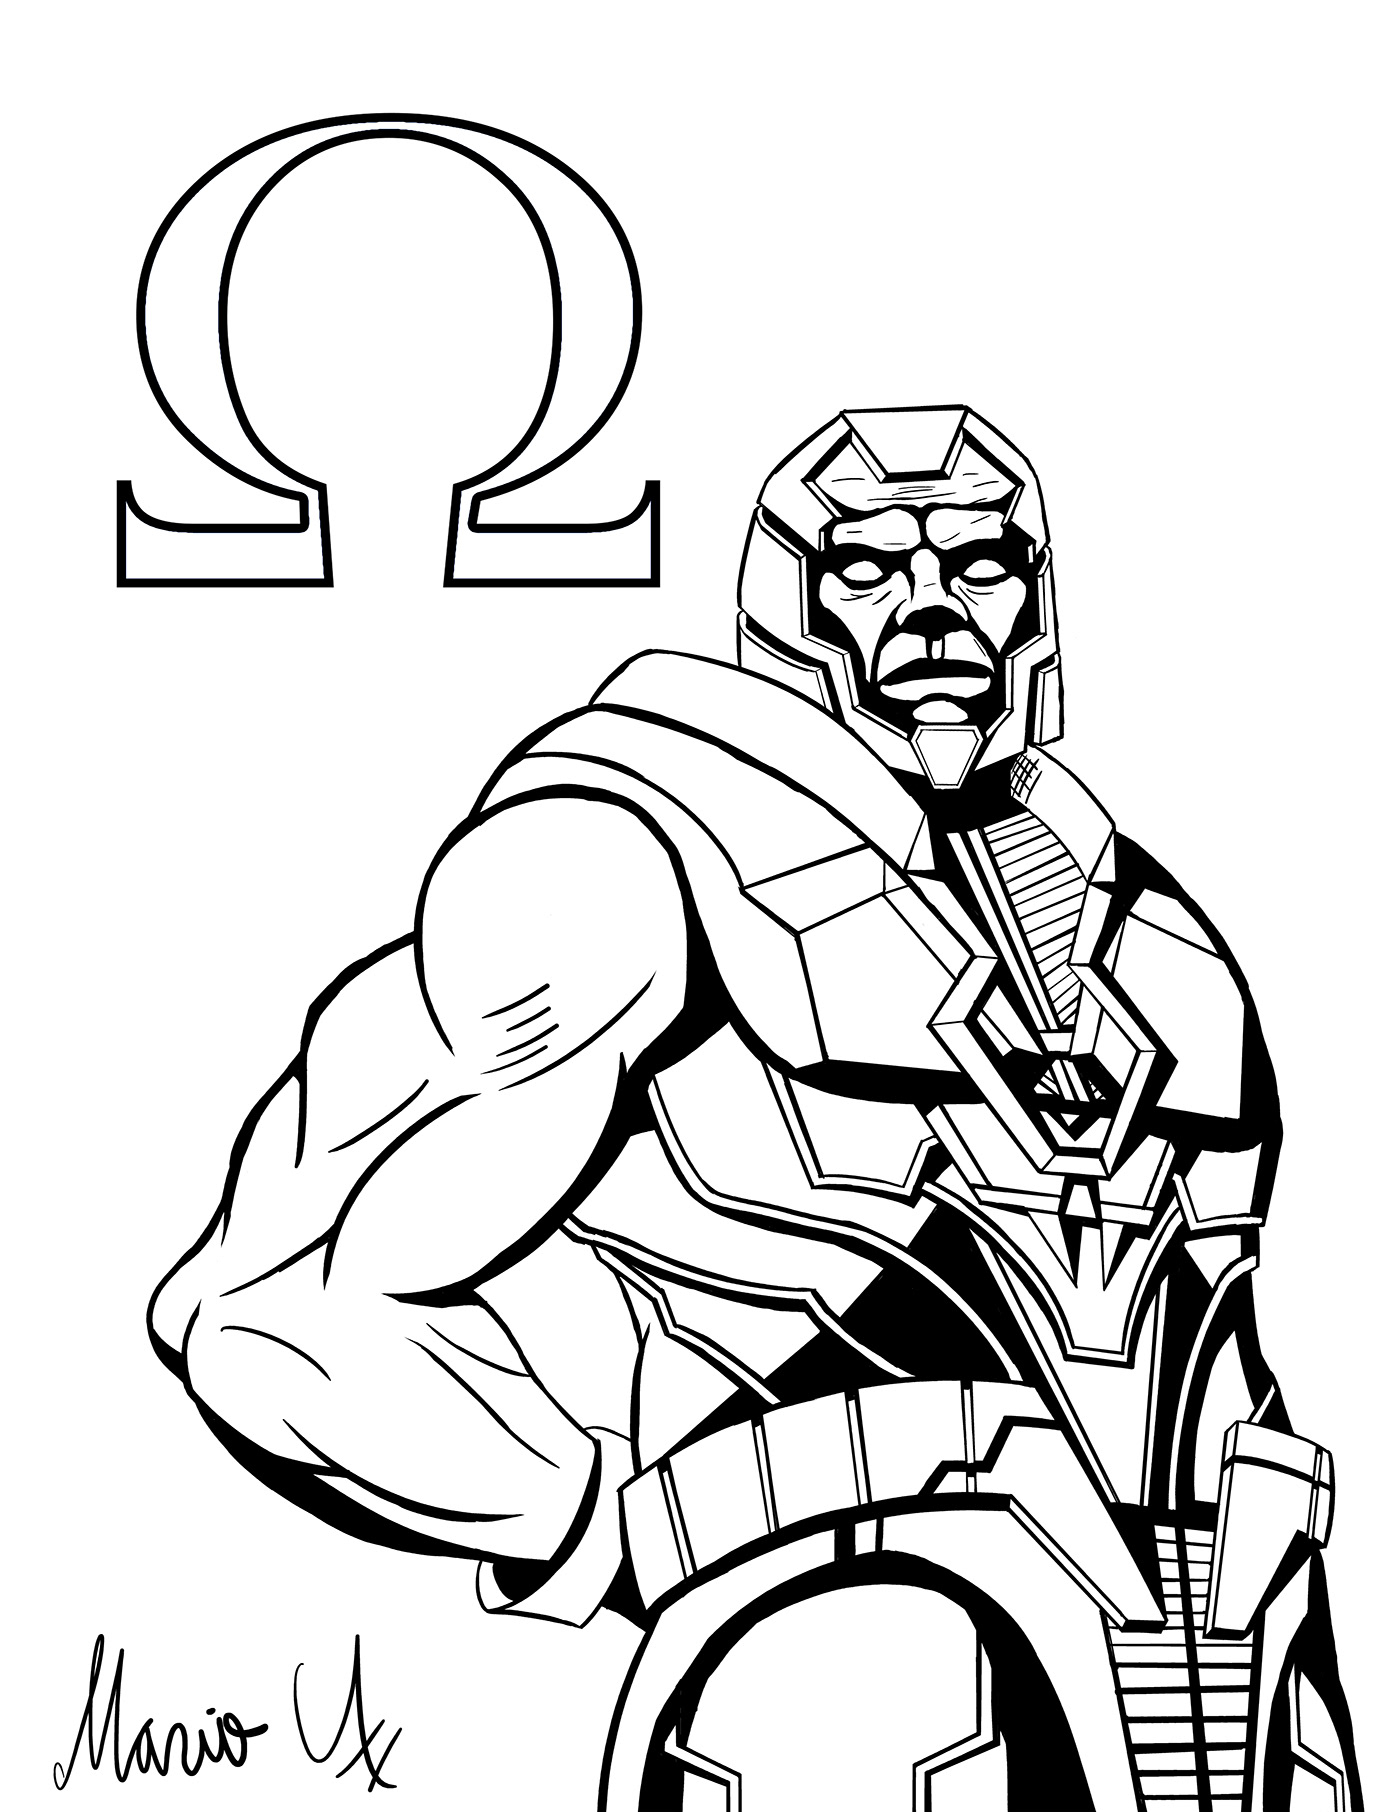 Dc Comics Injustice 2 Darkseid Netherrealms studios Omega new gods apokolips super villain Tyrant dictator